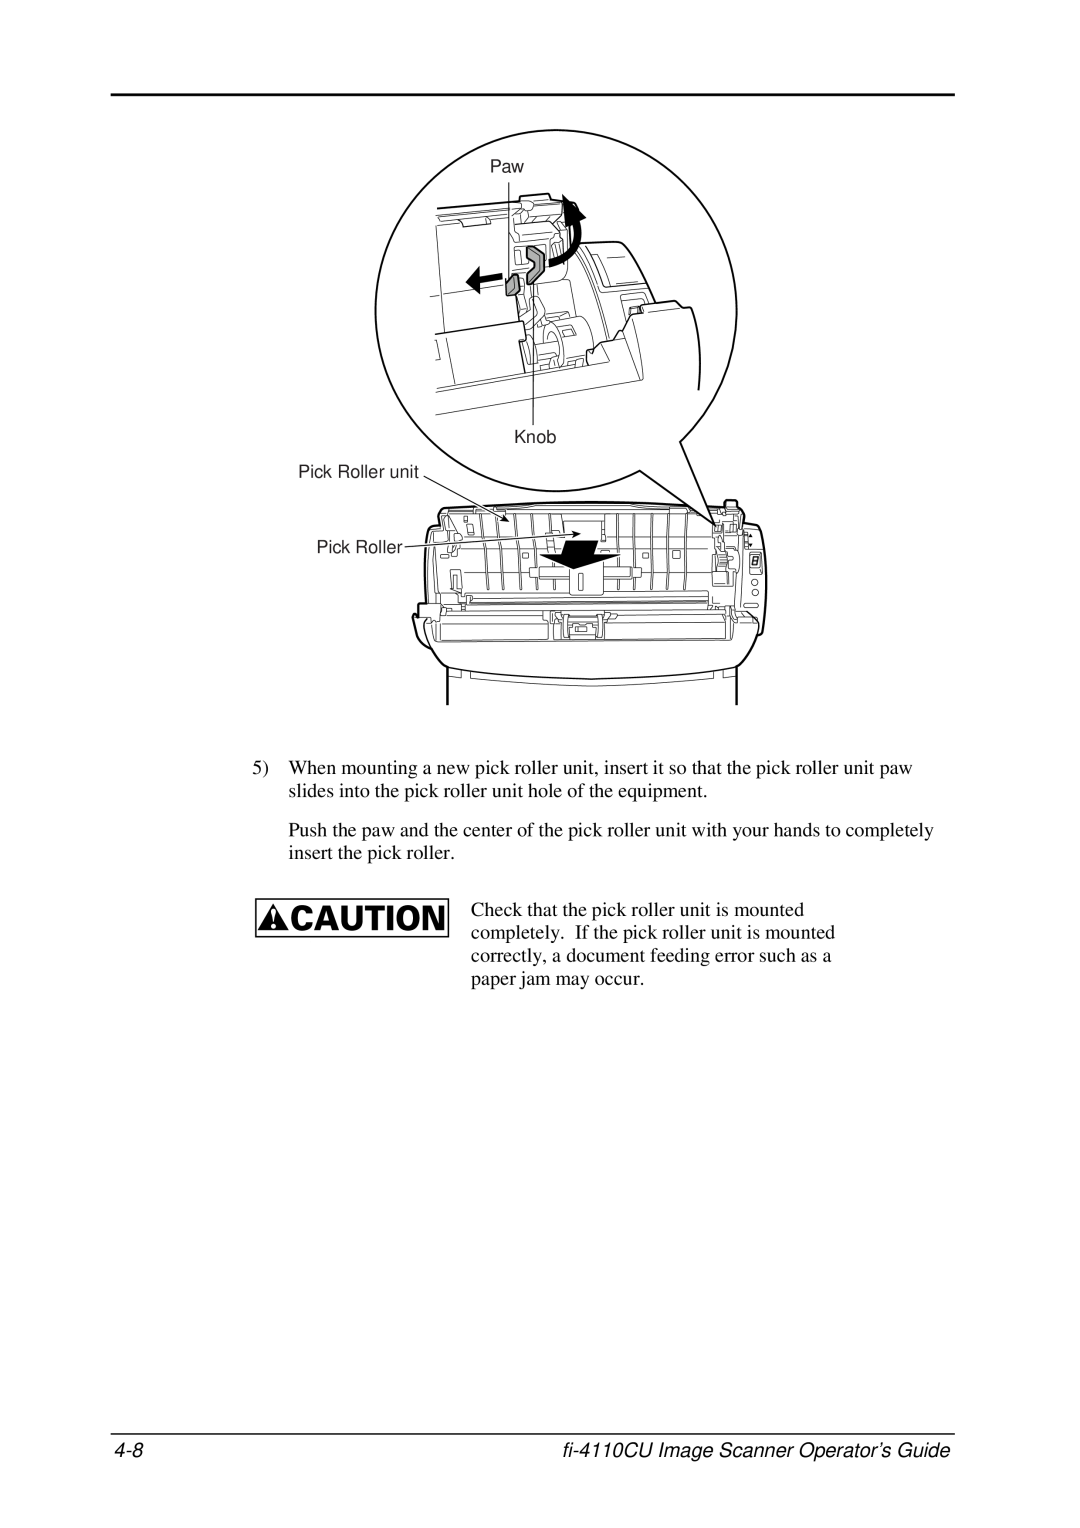 Fujitsu C150-E194-01EN manual fi-4110CU Image Scanner Operator’s Guide, Paw Knob Pick Roller unit Pick Roller 